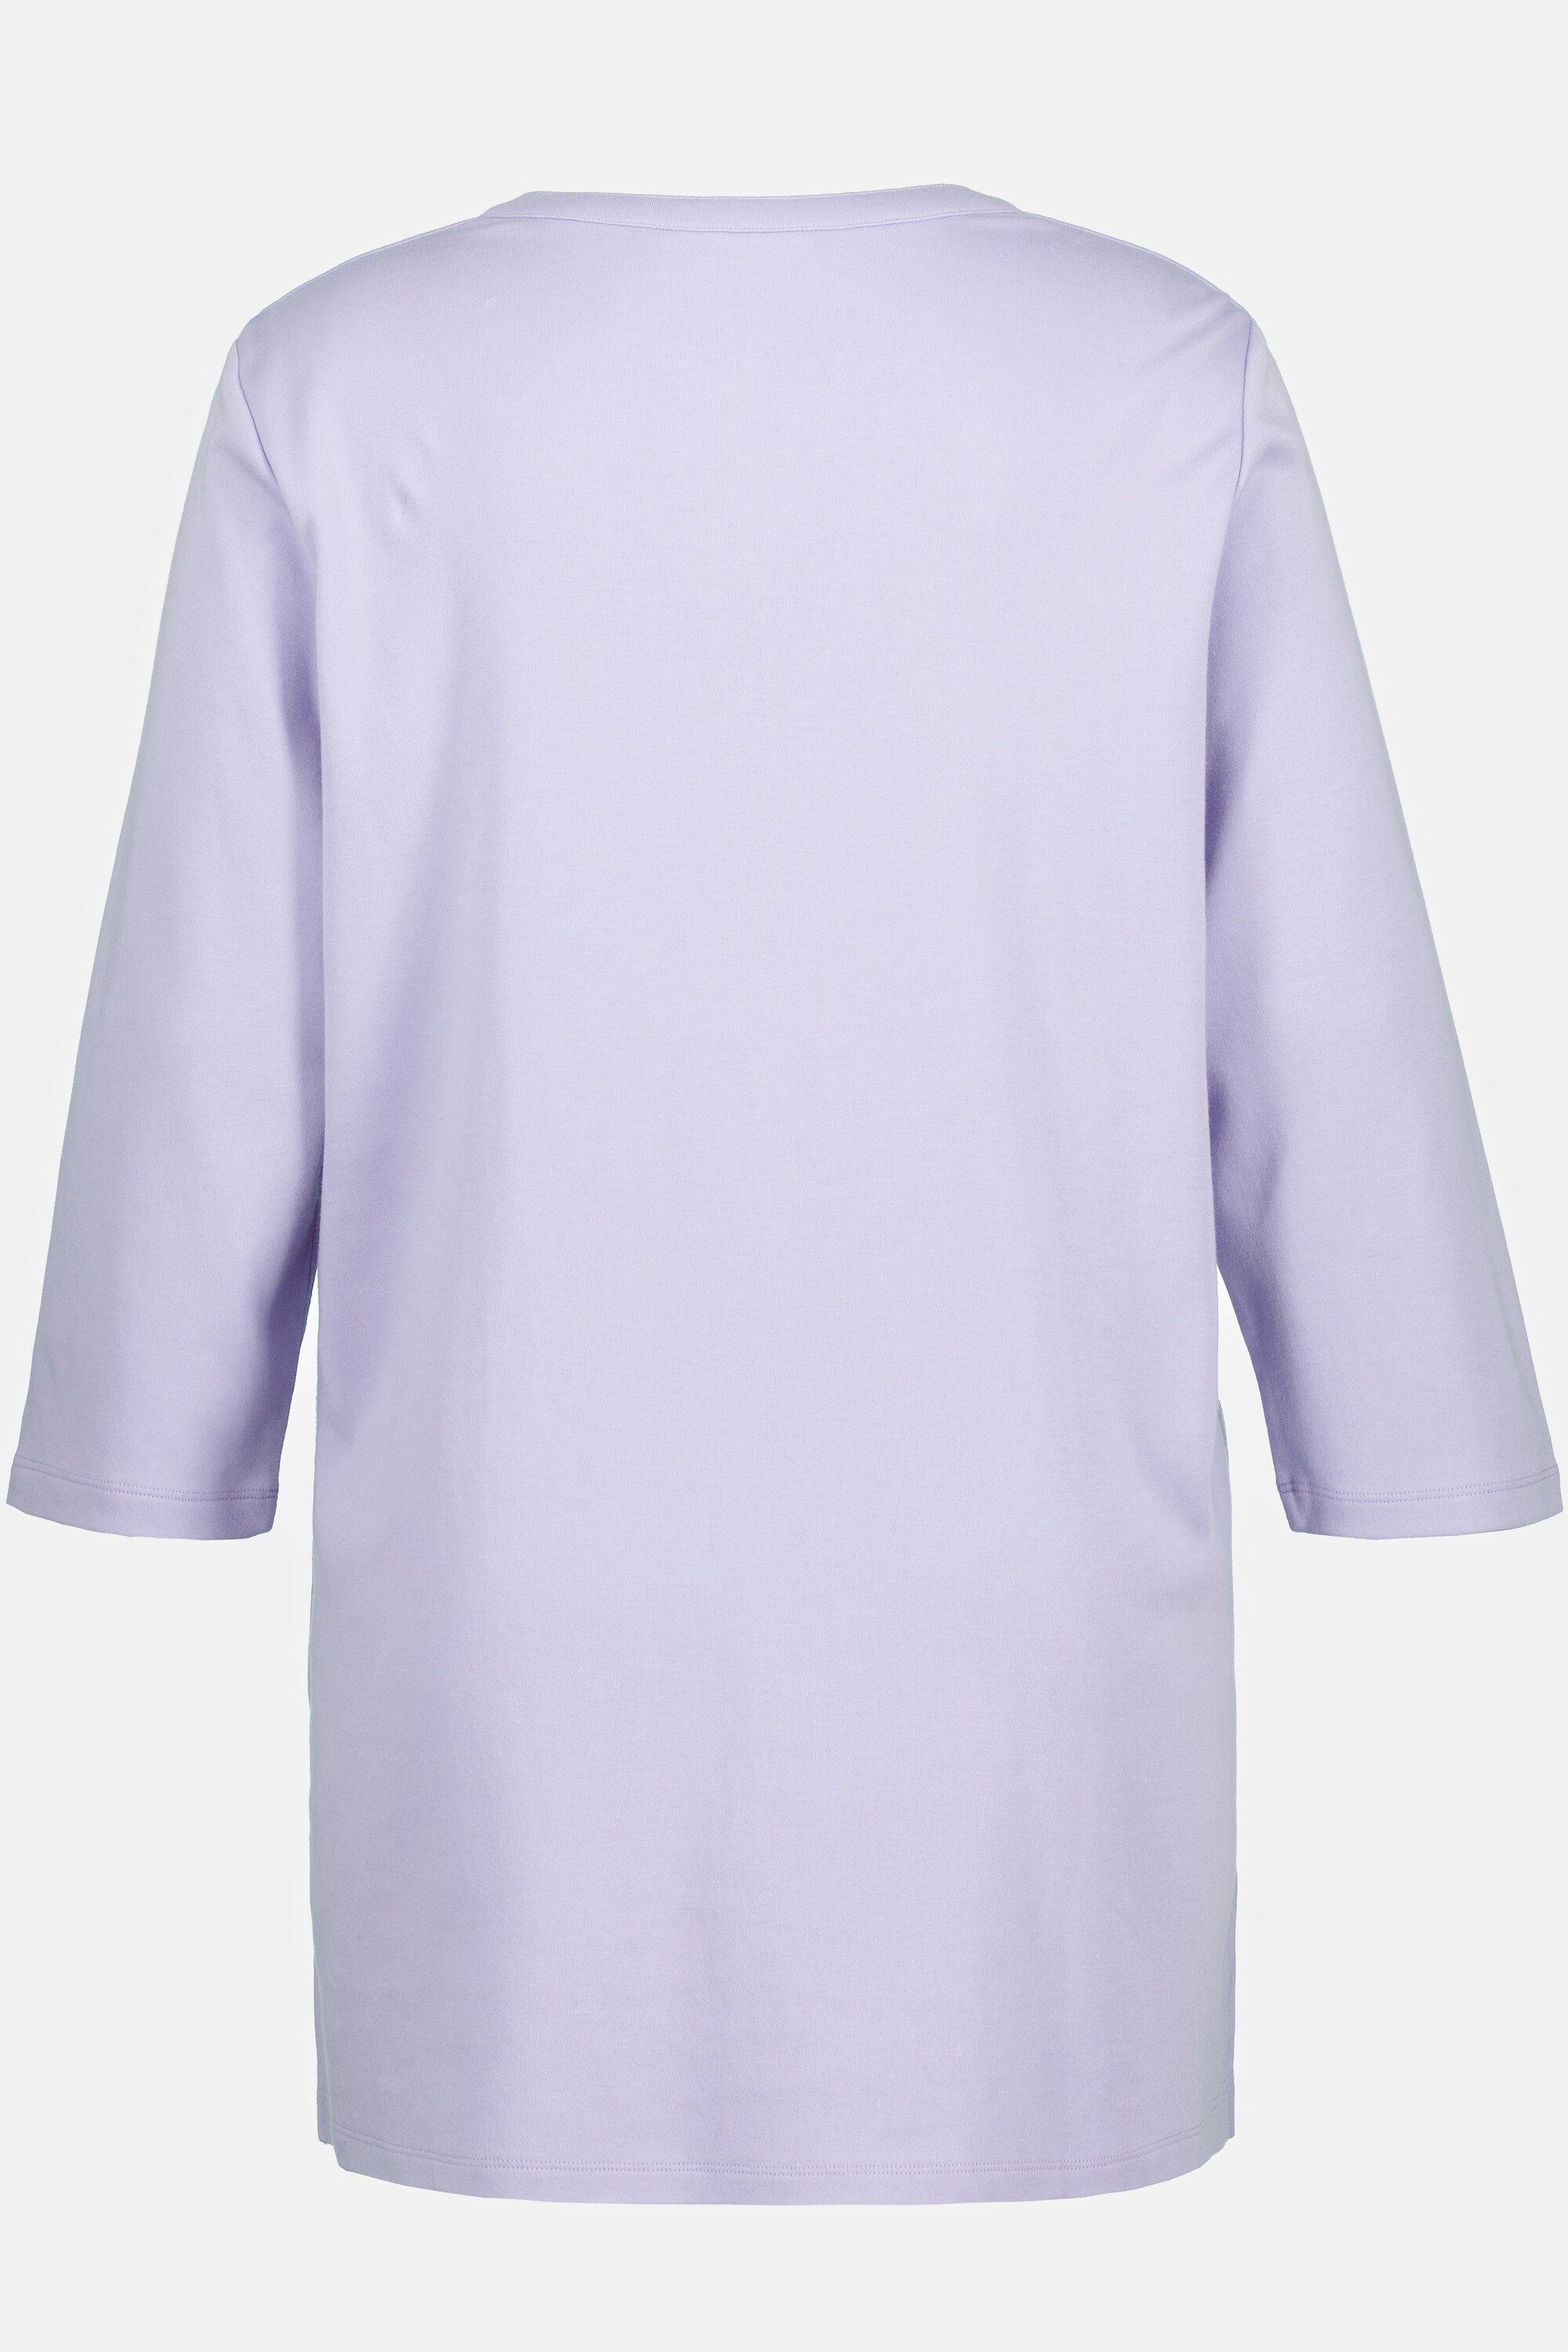 Ulla Popken Rundhalsshirt lavendel Modal A-Line Tunika-Ausschnitt Shirt Schmuckknopf